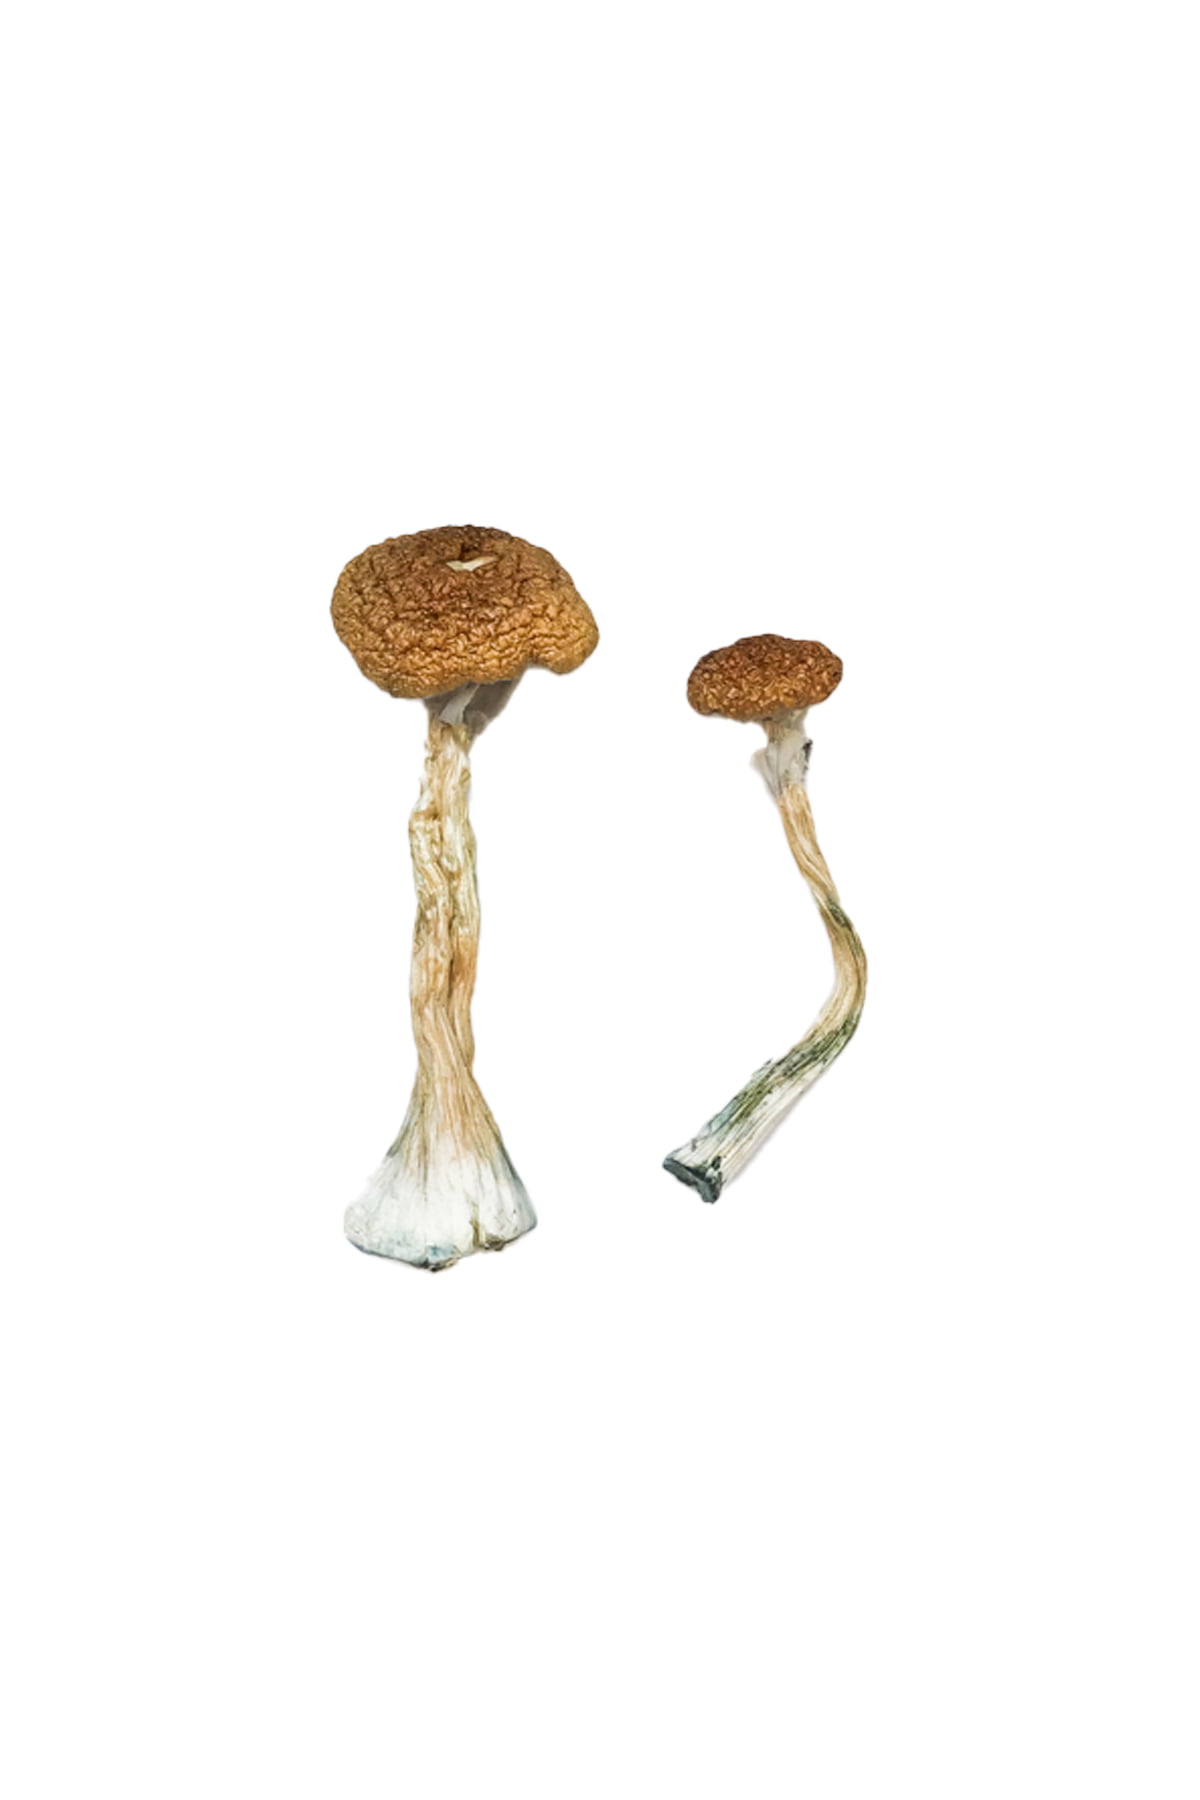 African Transkei Mushrooms